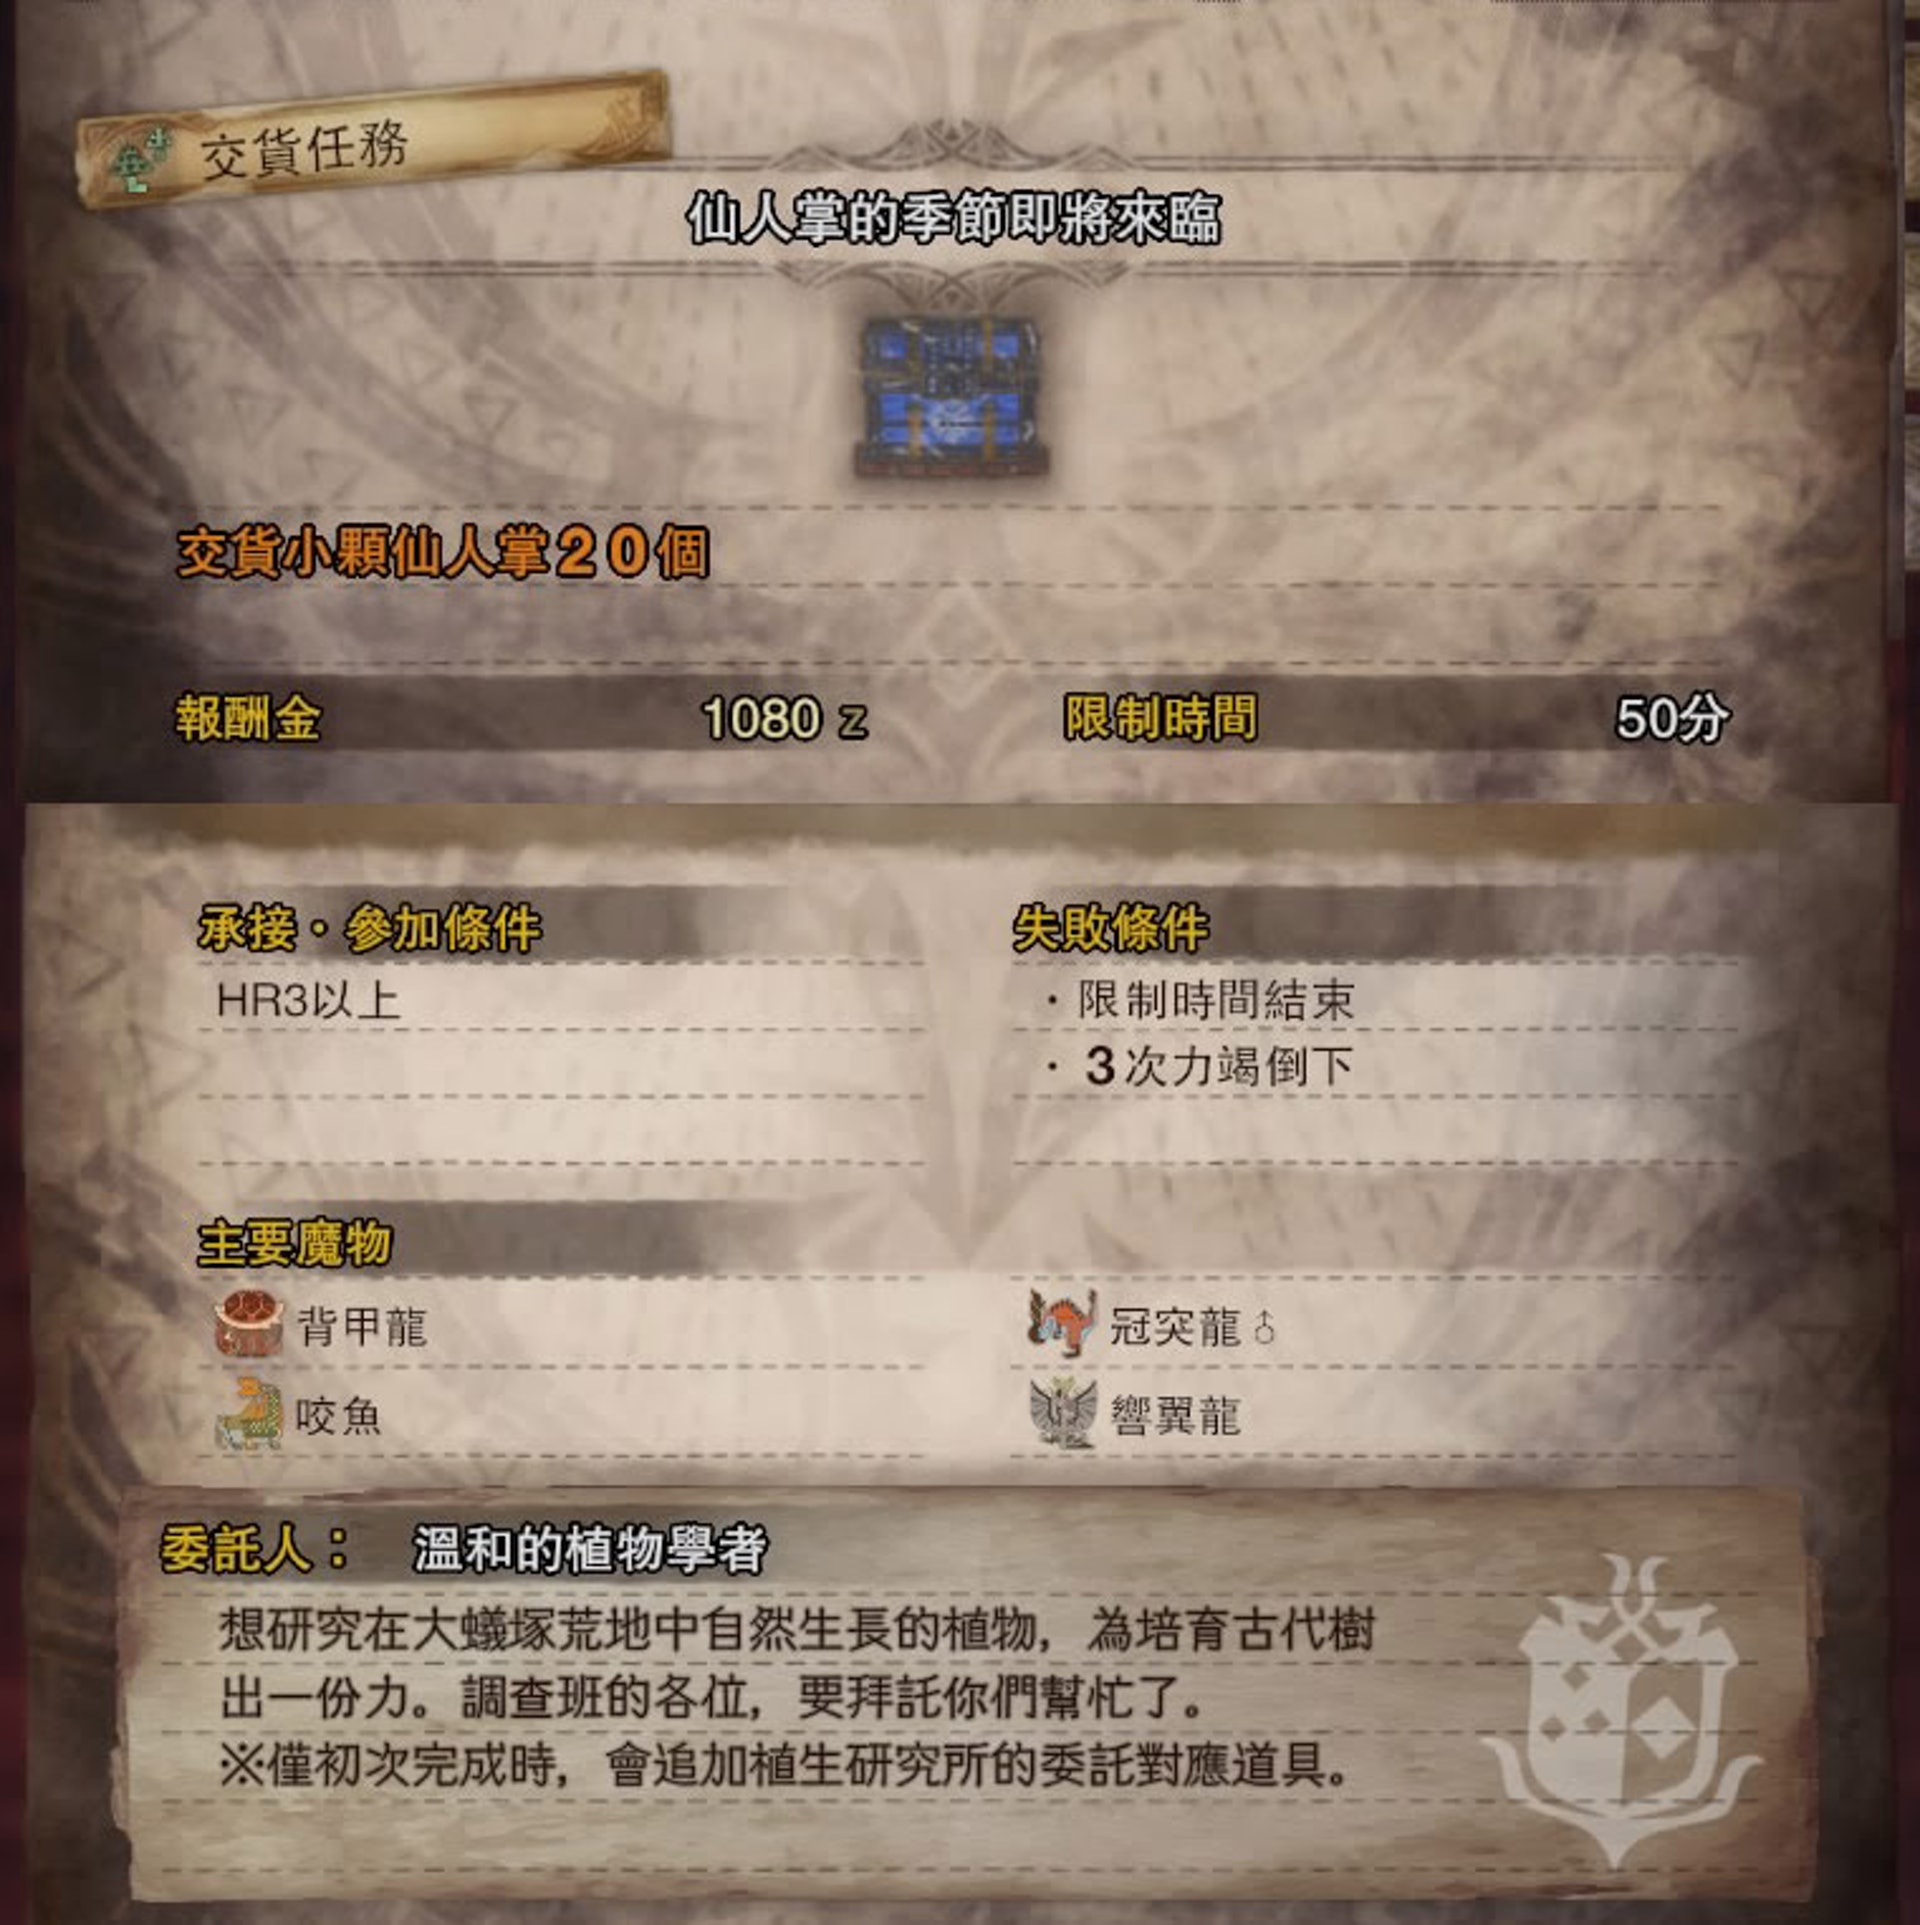 Monster Hunter World素材攻略 植生研究所素材 欄位全開流程 香港01 遊戲動漫